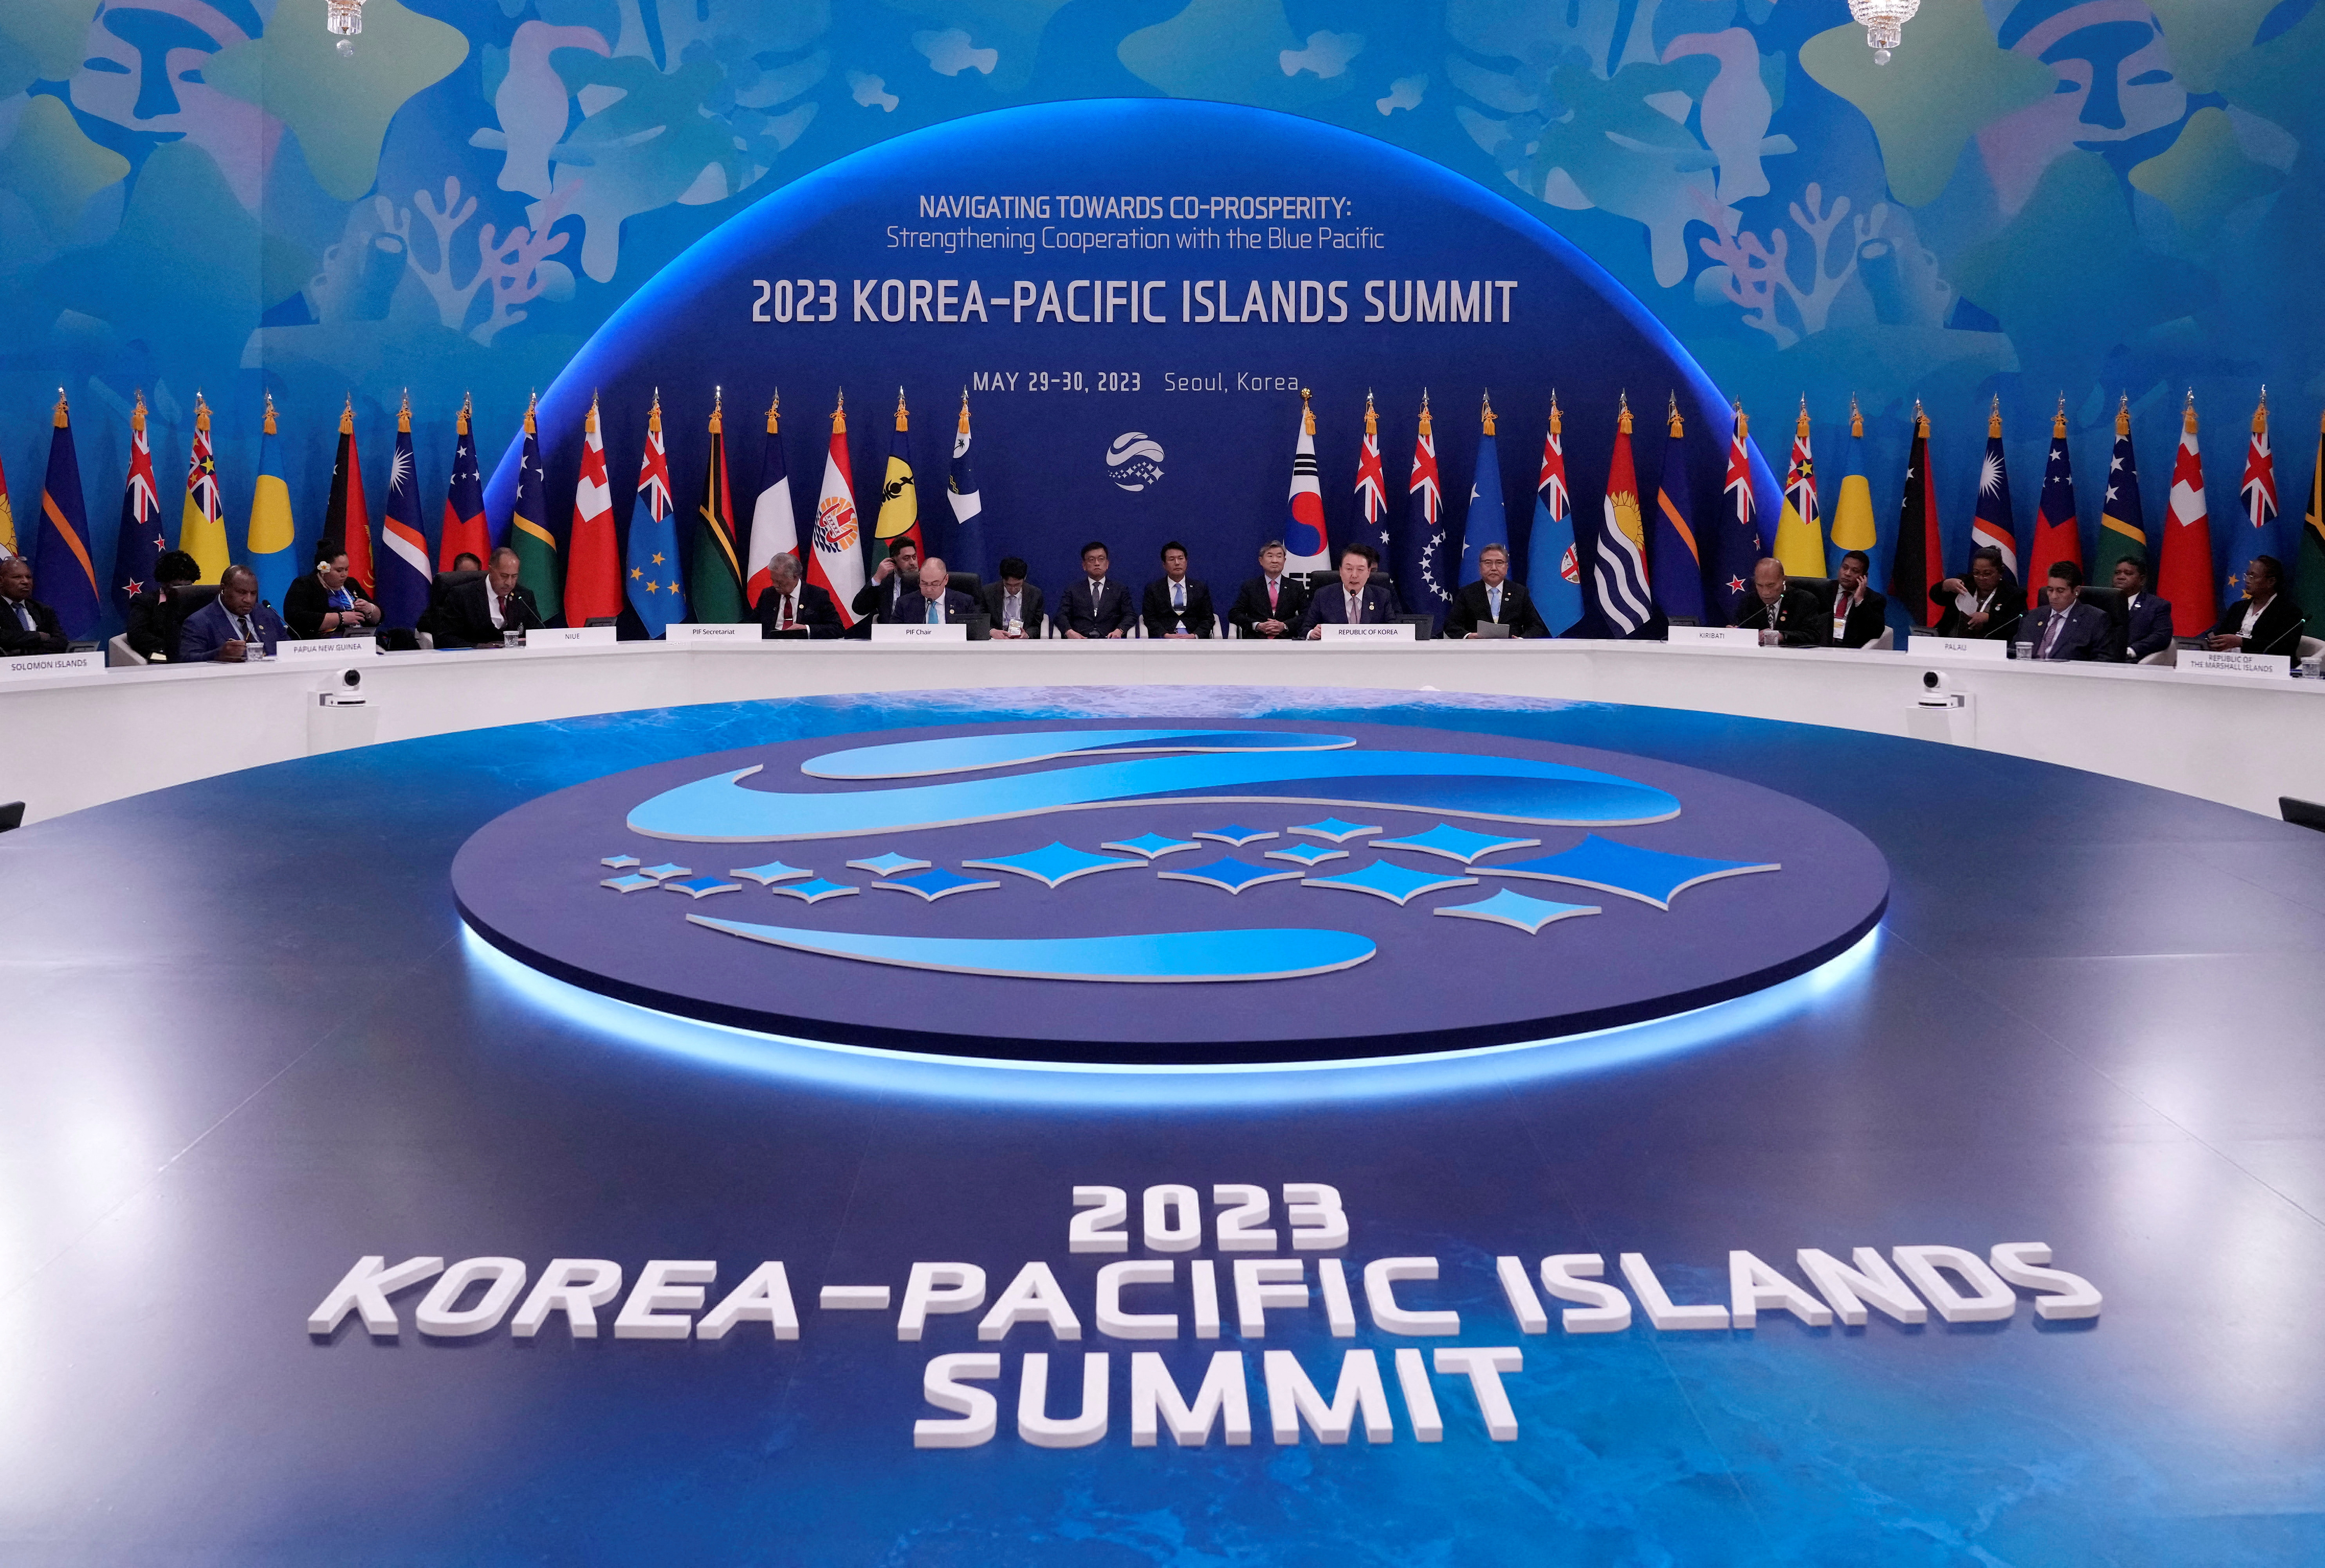 2023 Korea-Pacific Islands Summit, in Seoul